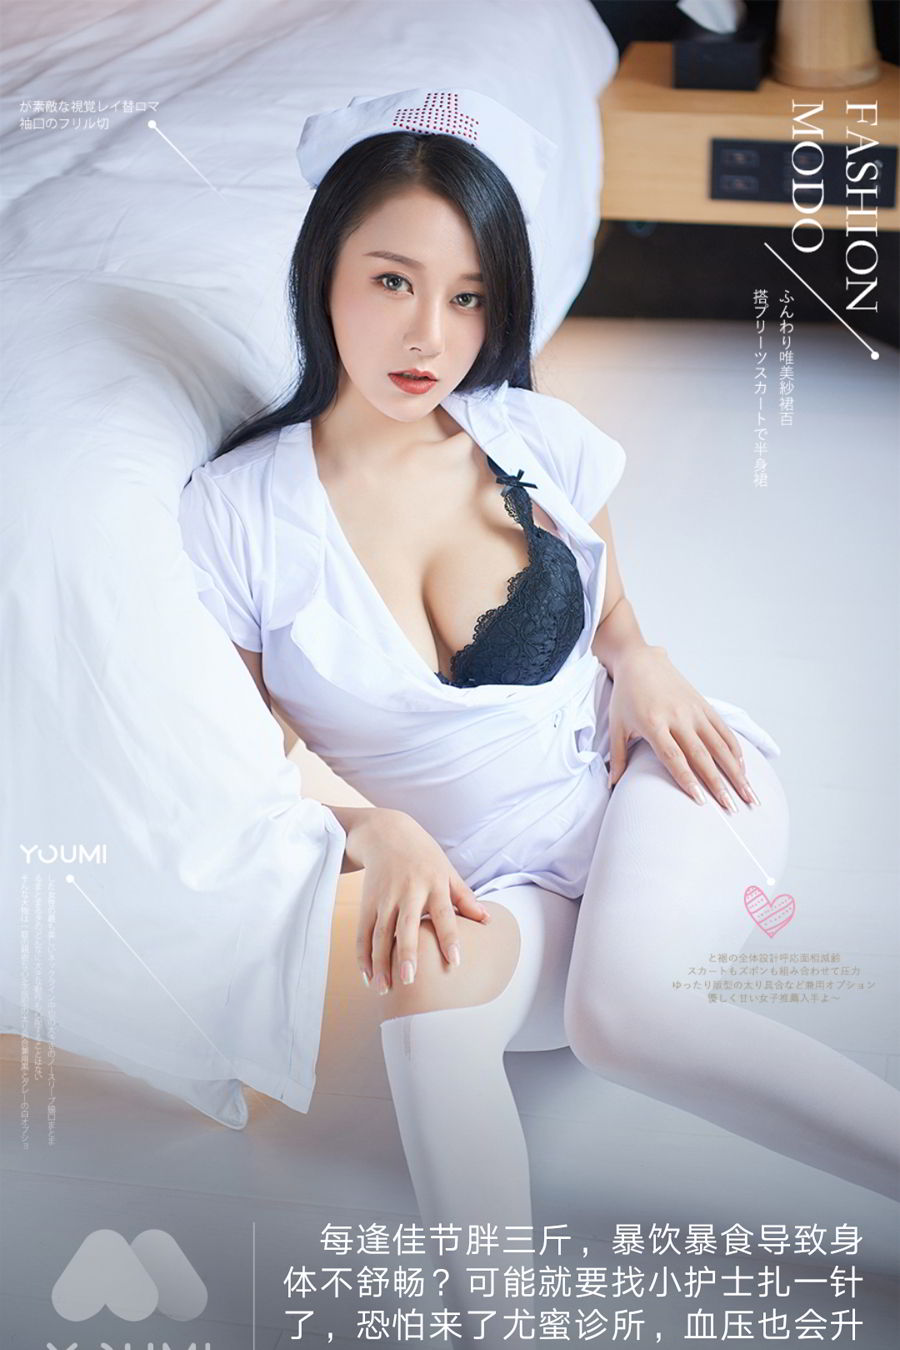 [Youmei] Vol.124 Pure White Angel